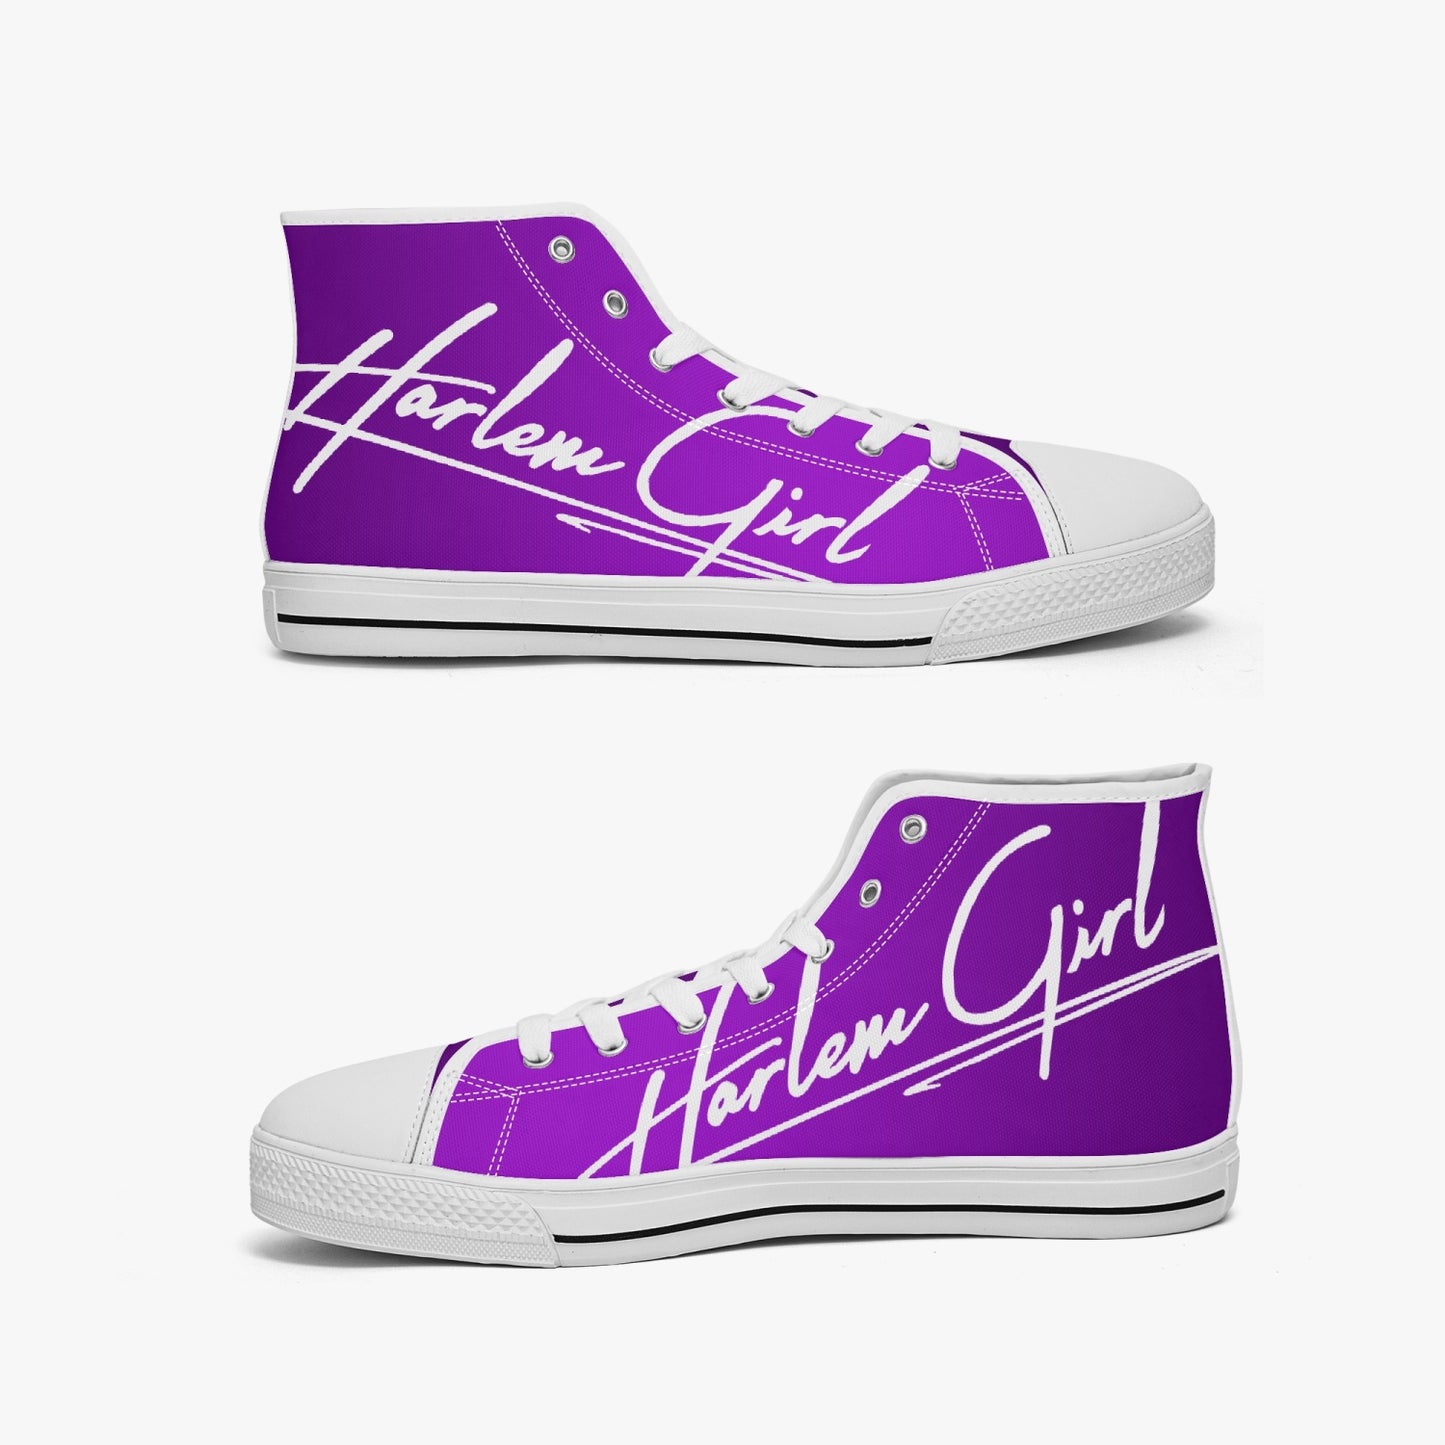 HB Harlem Girl "Lenox Ave" Classic High Top - Amethyst - Women (Black or White Soles)